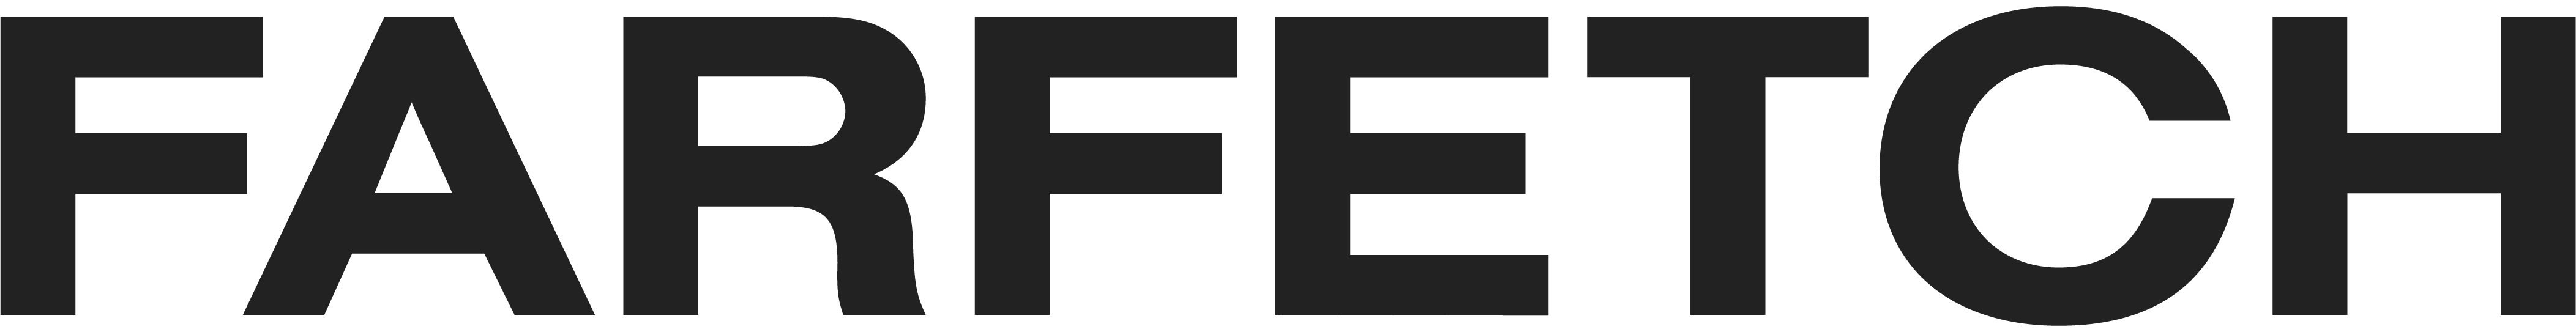 Farfetch-logo.png